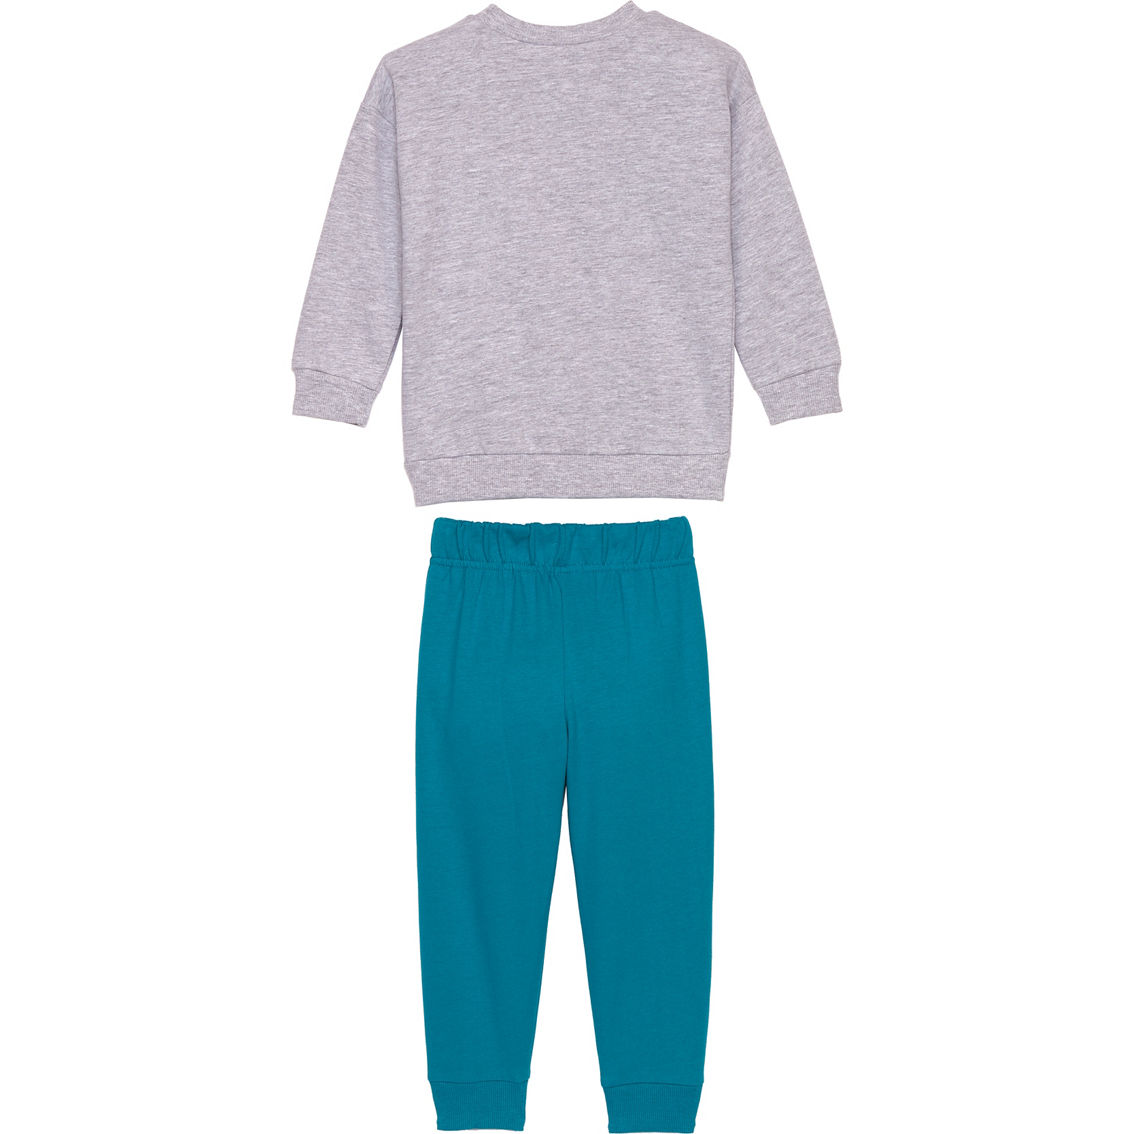 Disney Toddler Girls Encanto Fleece Sweater and Jogger Pants 2 pc. Set - Image 2 of 2